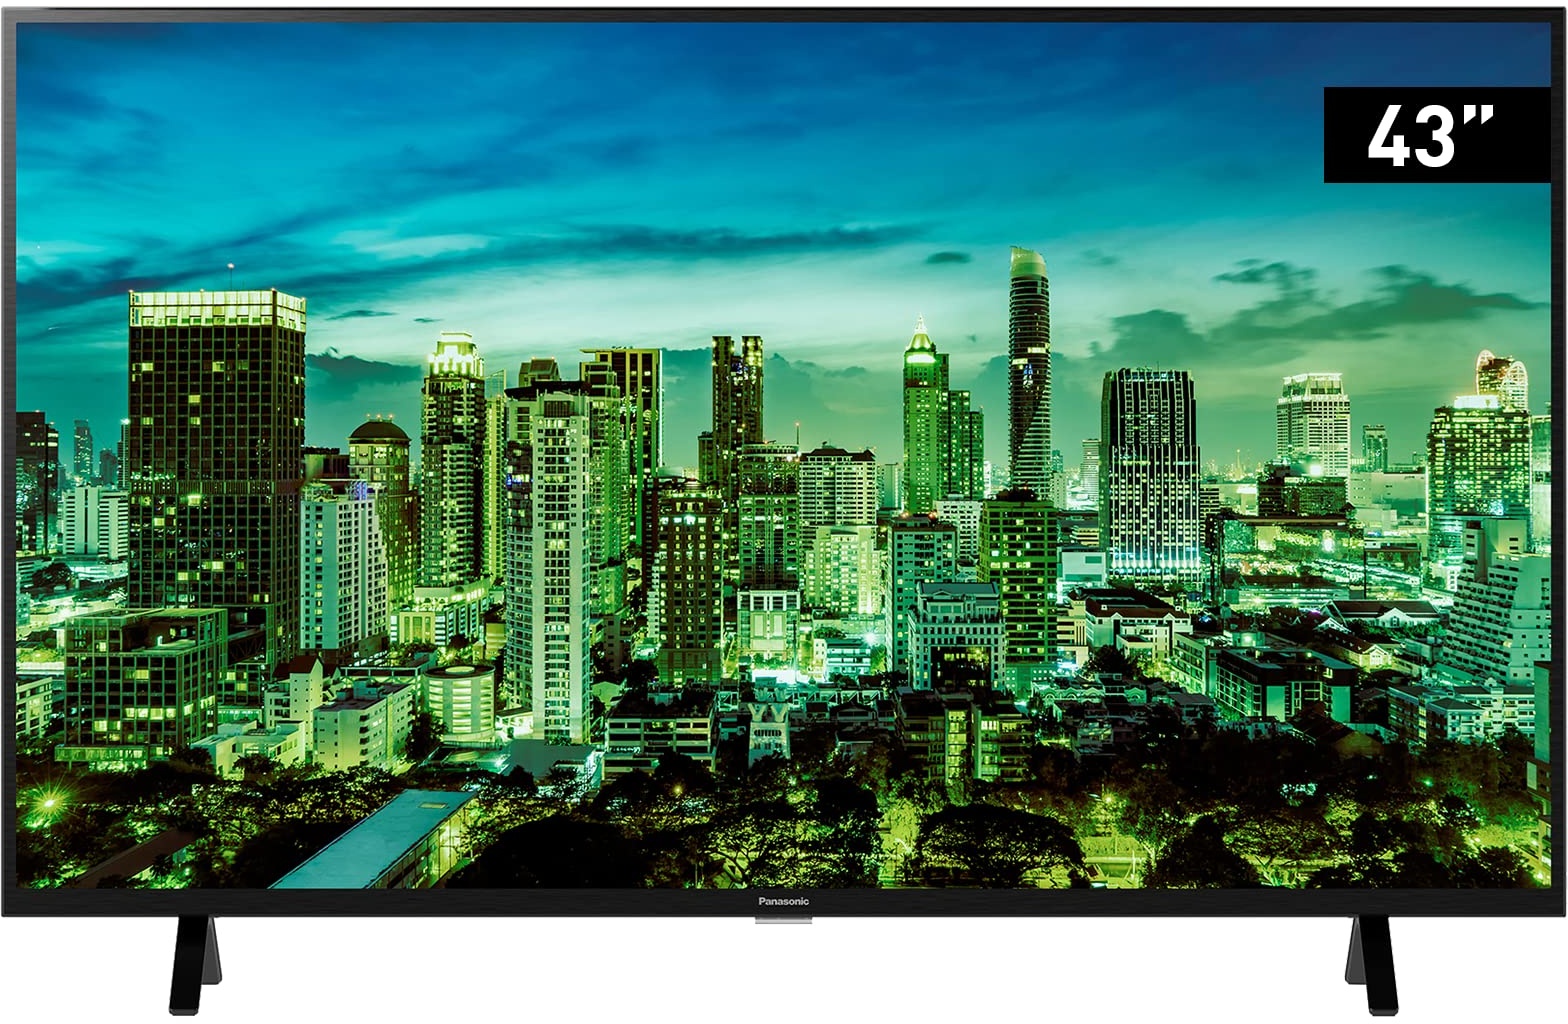 Panasonic TX-43LXW704 108 cm LED Fernseher (43 Zoll, HDR Bright Panel, 4K Ultra HD, Triple Tuner, HDMI, USB, Smart TV), schwarz